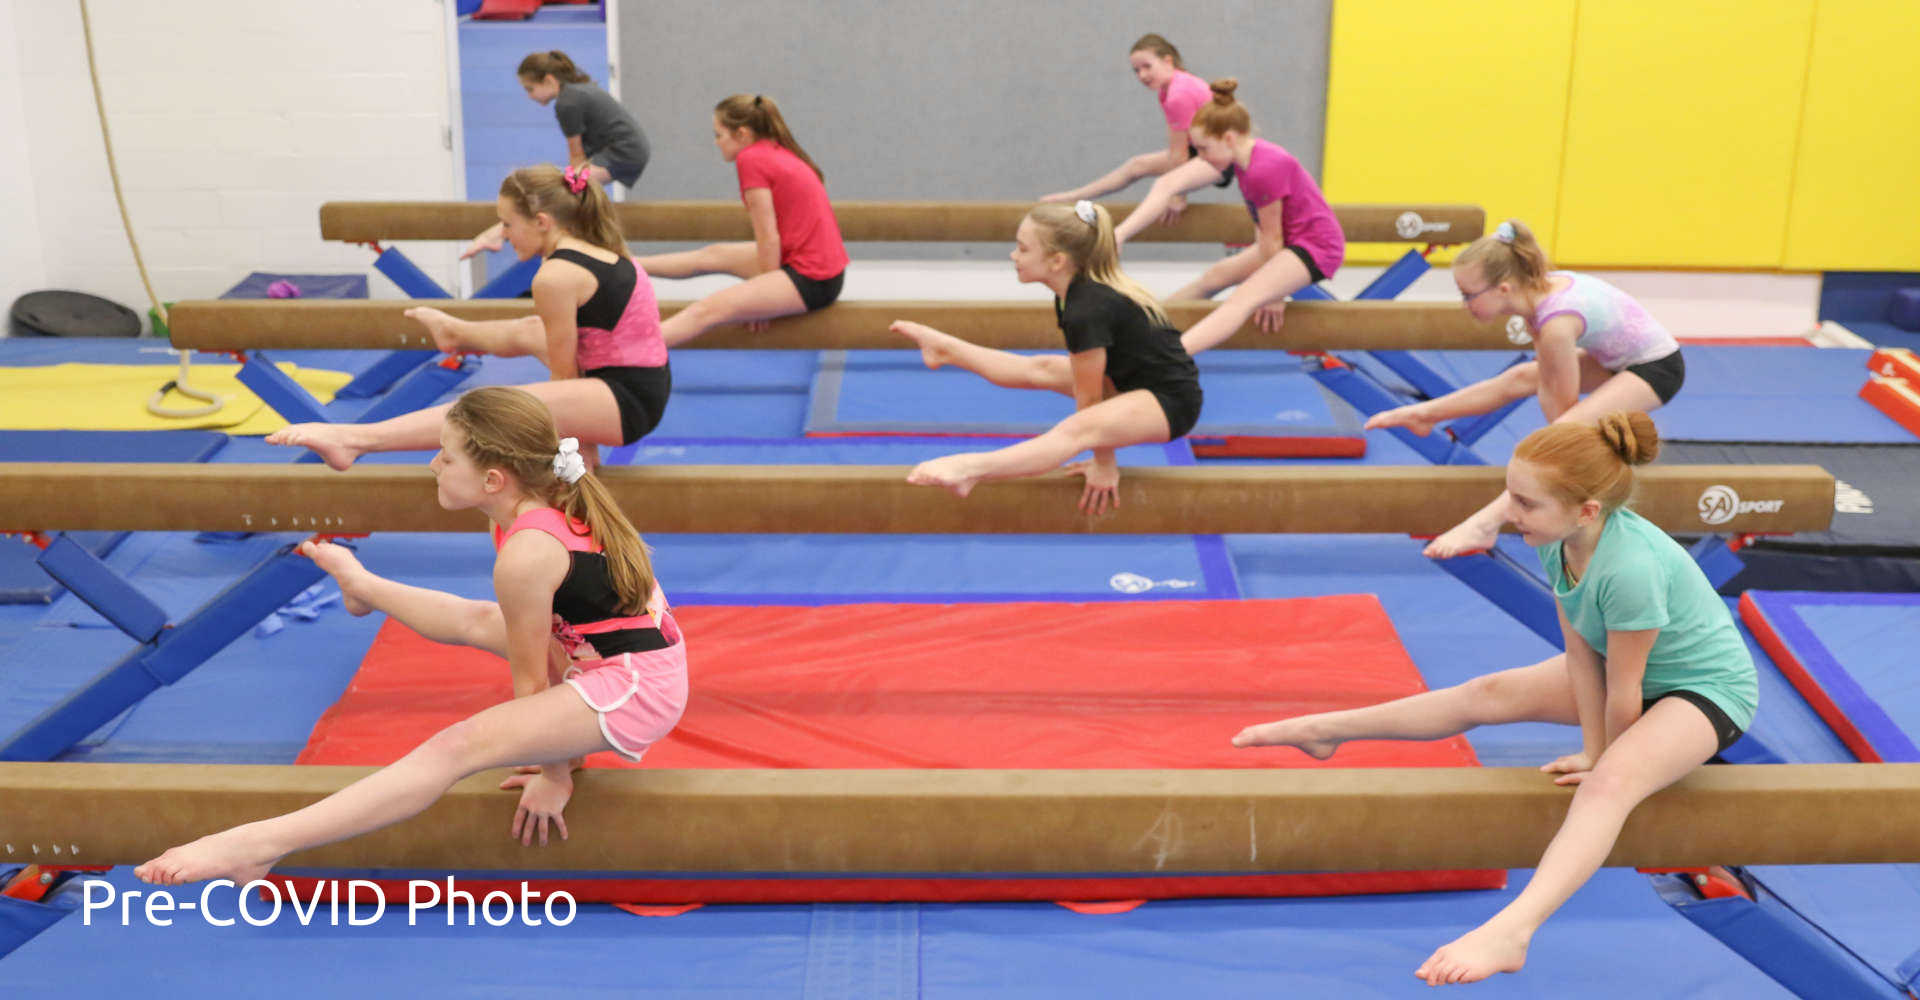 Girls training on balance beams at Gymworlds' gymnastics camp at Gymworld Adventures in Gymnastics in Northwest London, Ontario